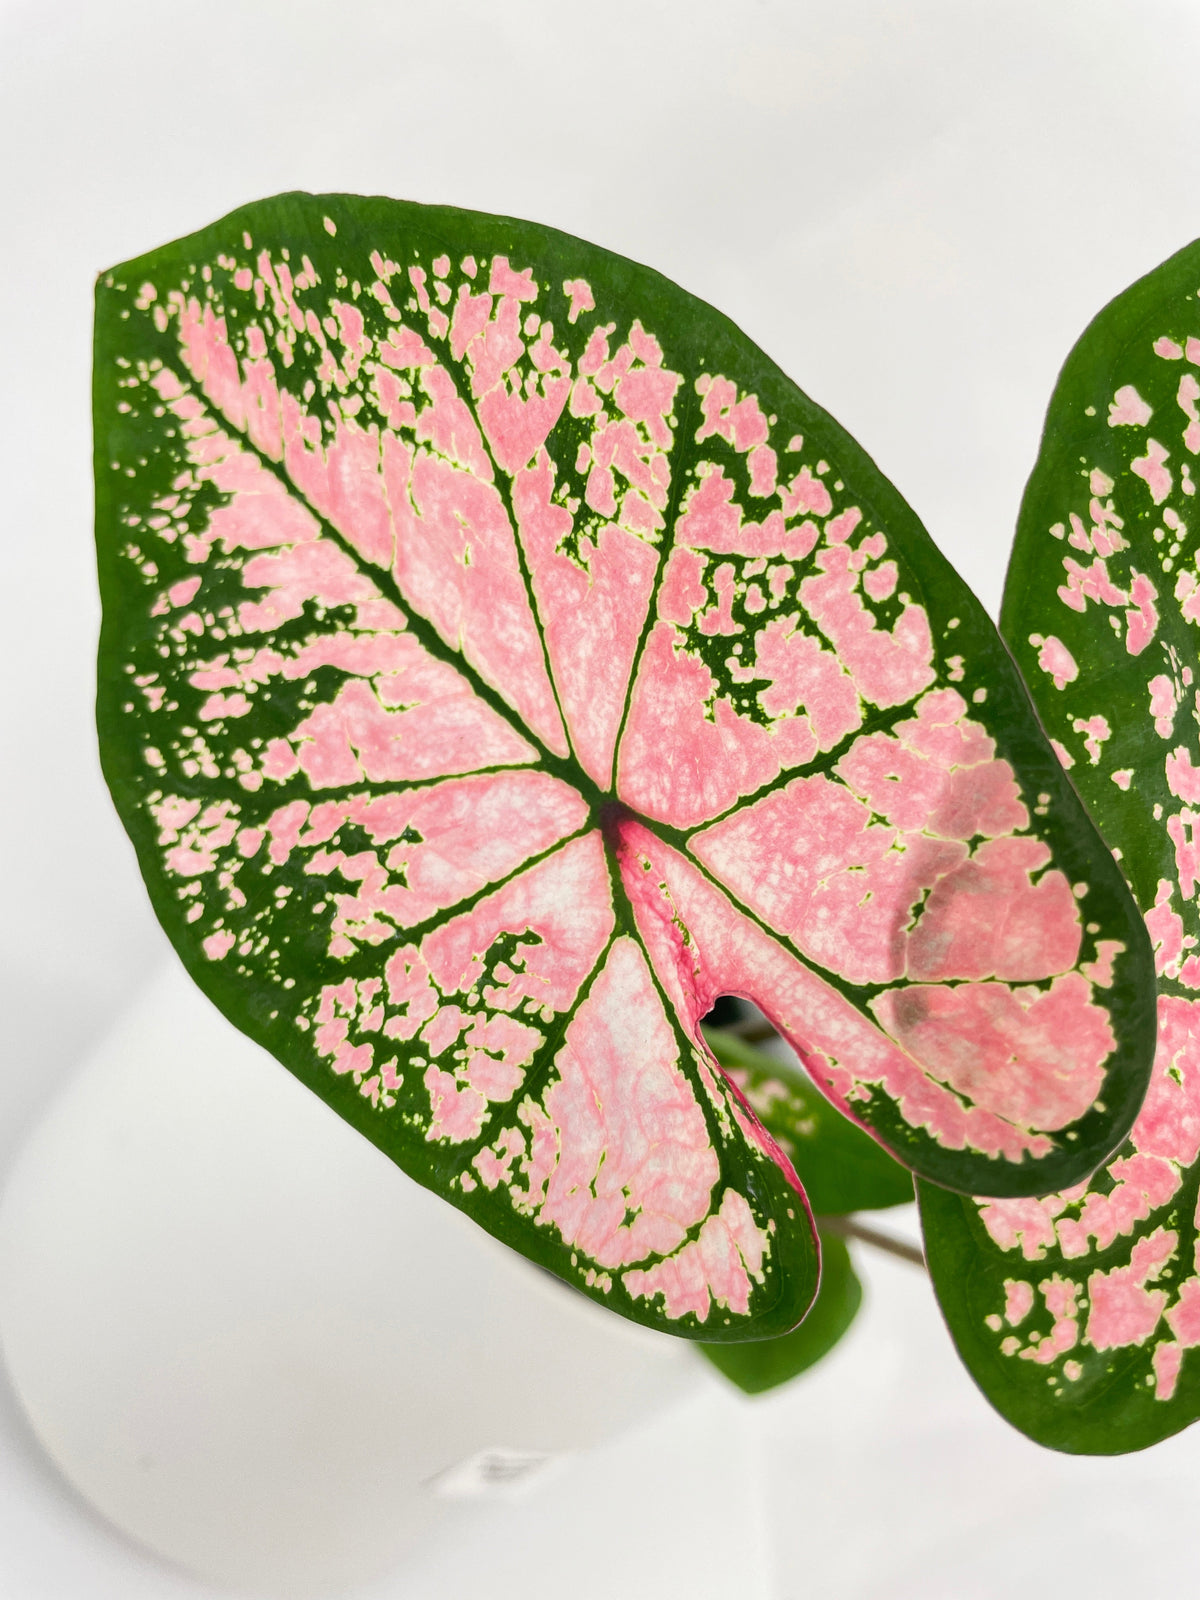 Caladium Pink Splash by Bumble Plants